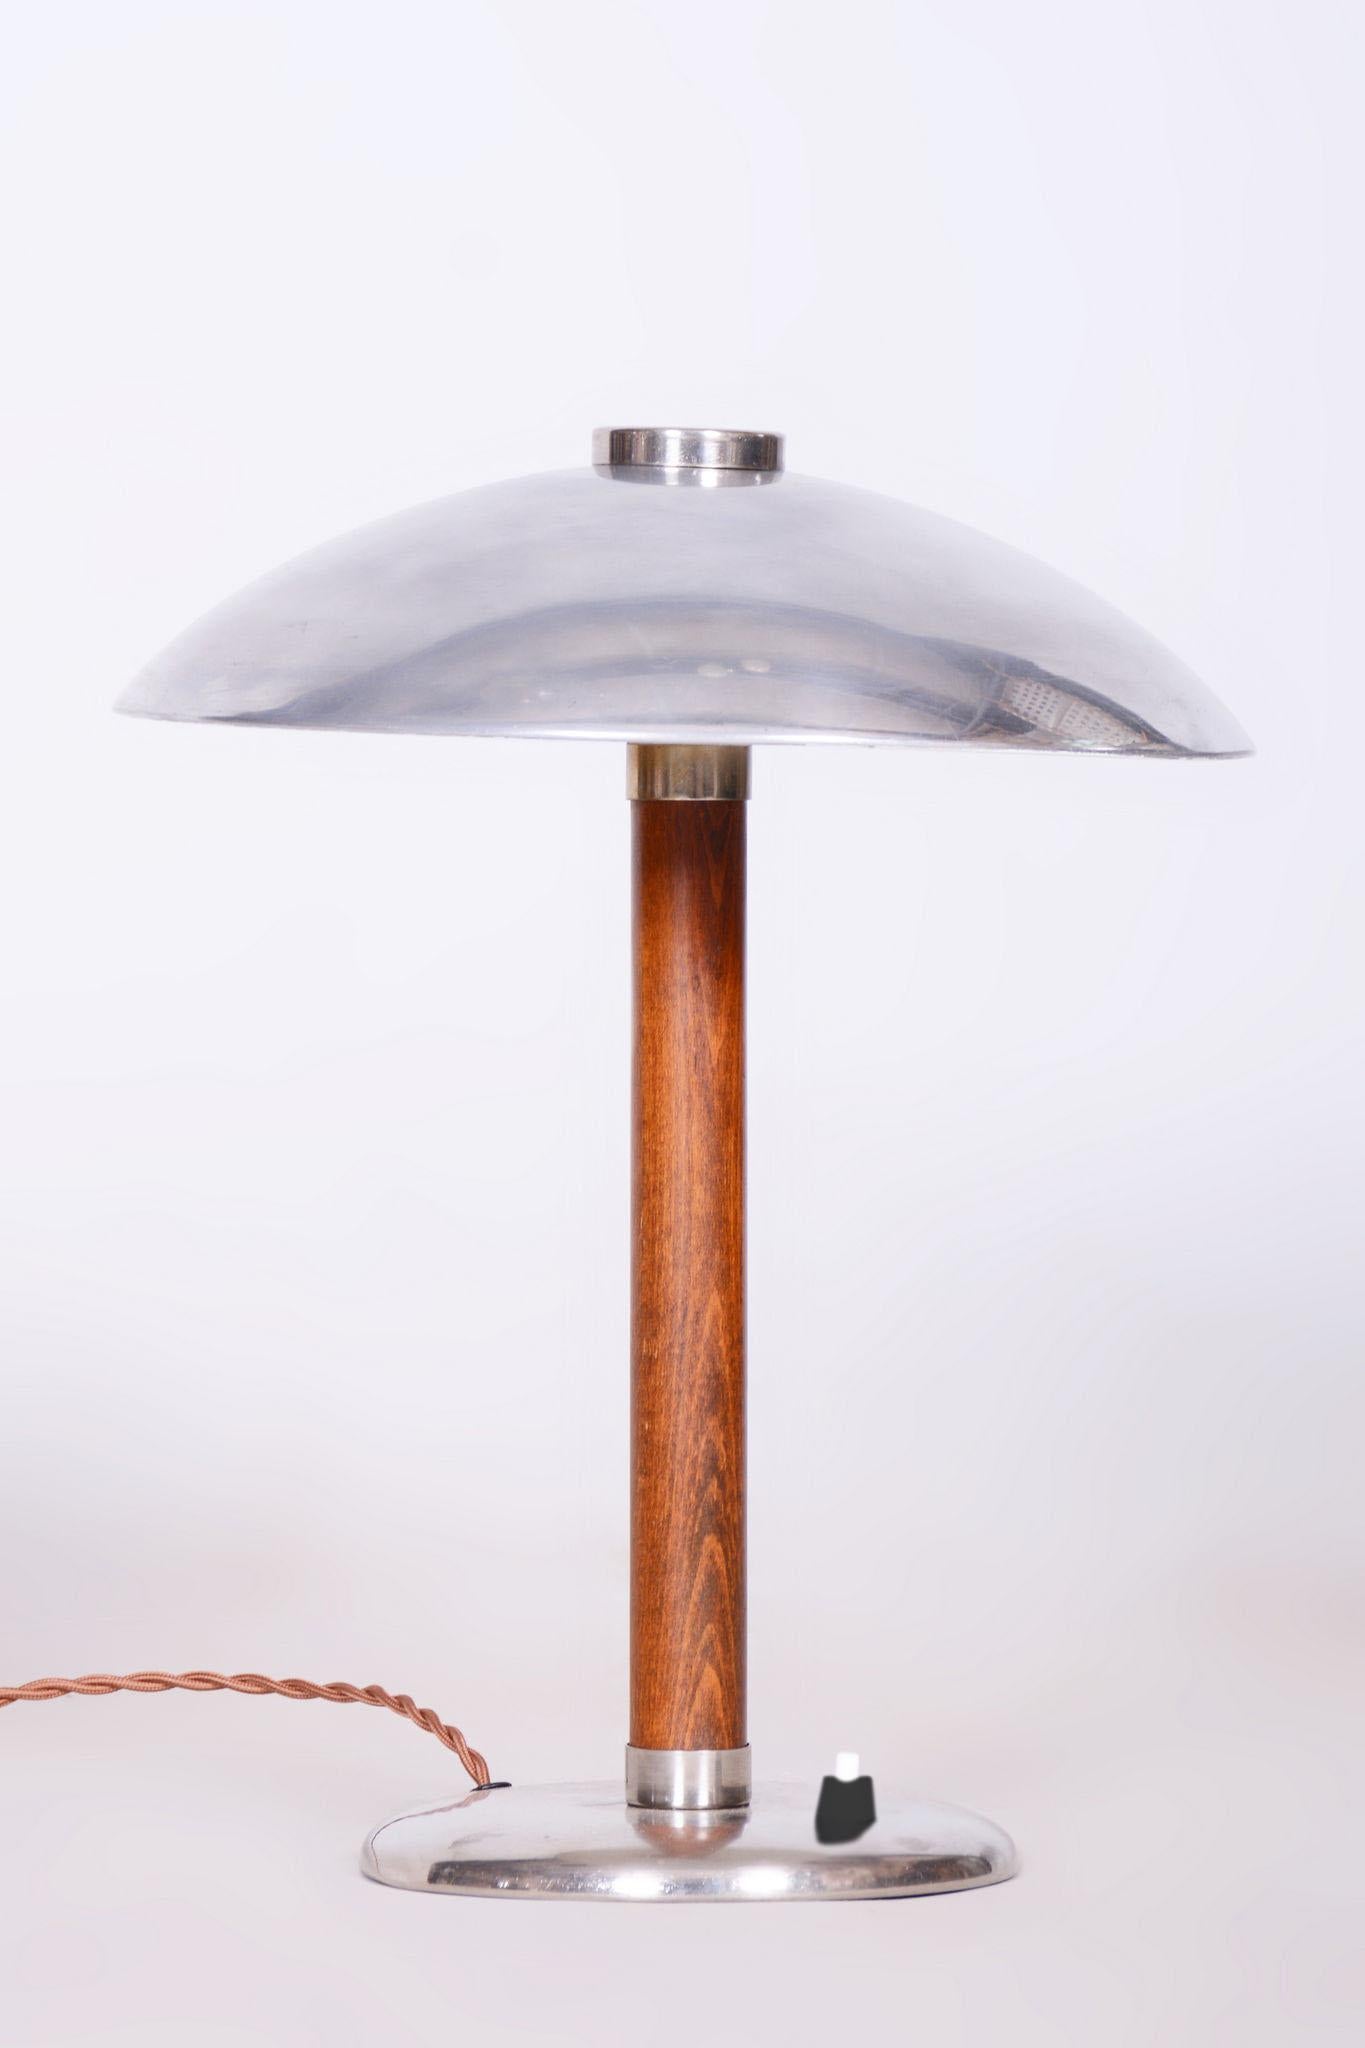 Restored ArtDeco Table Lamp, Chrome, New Electrification, Czechia, 1930s For Sale 1